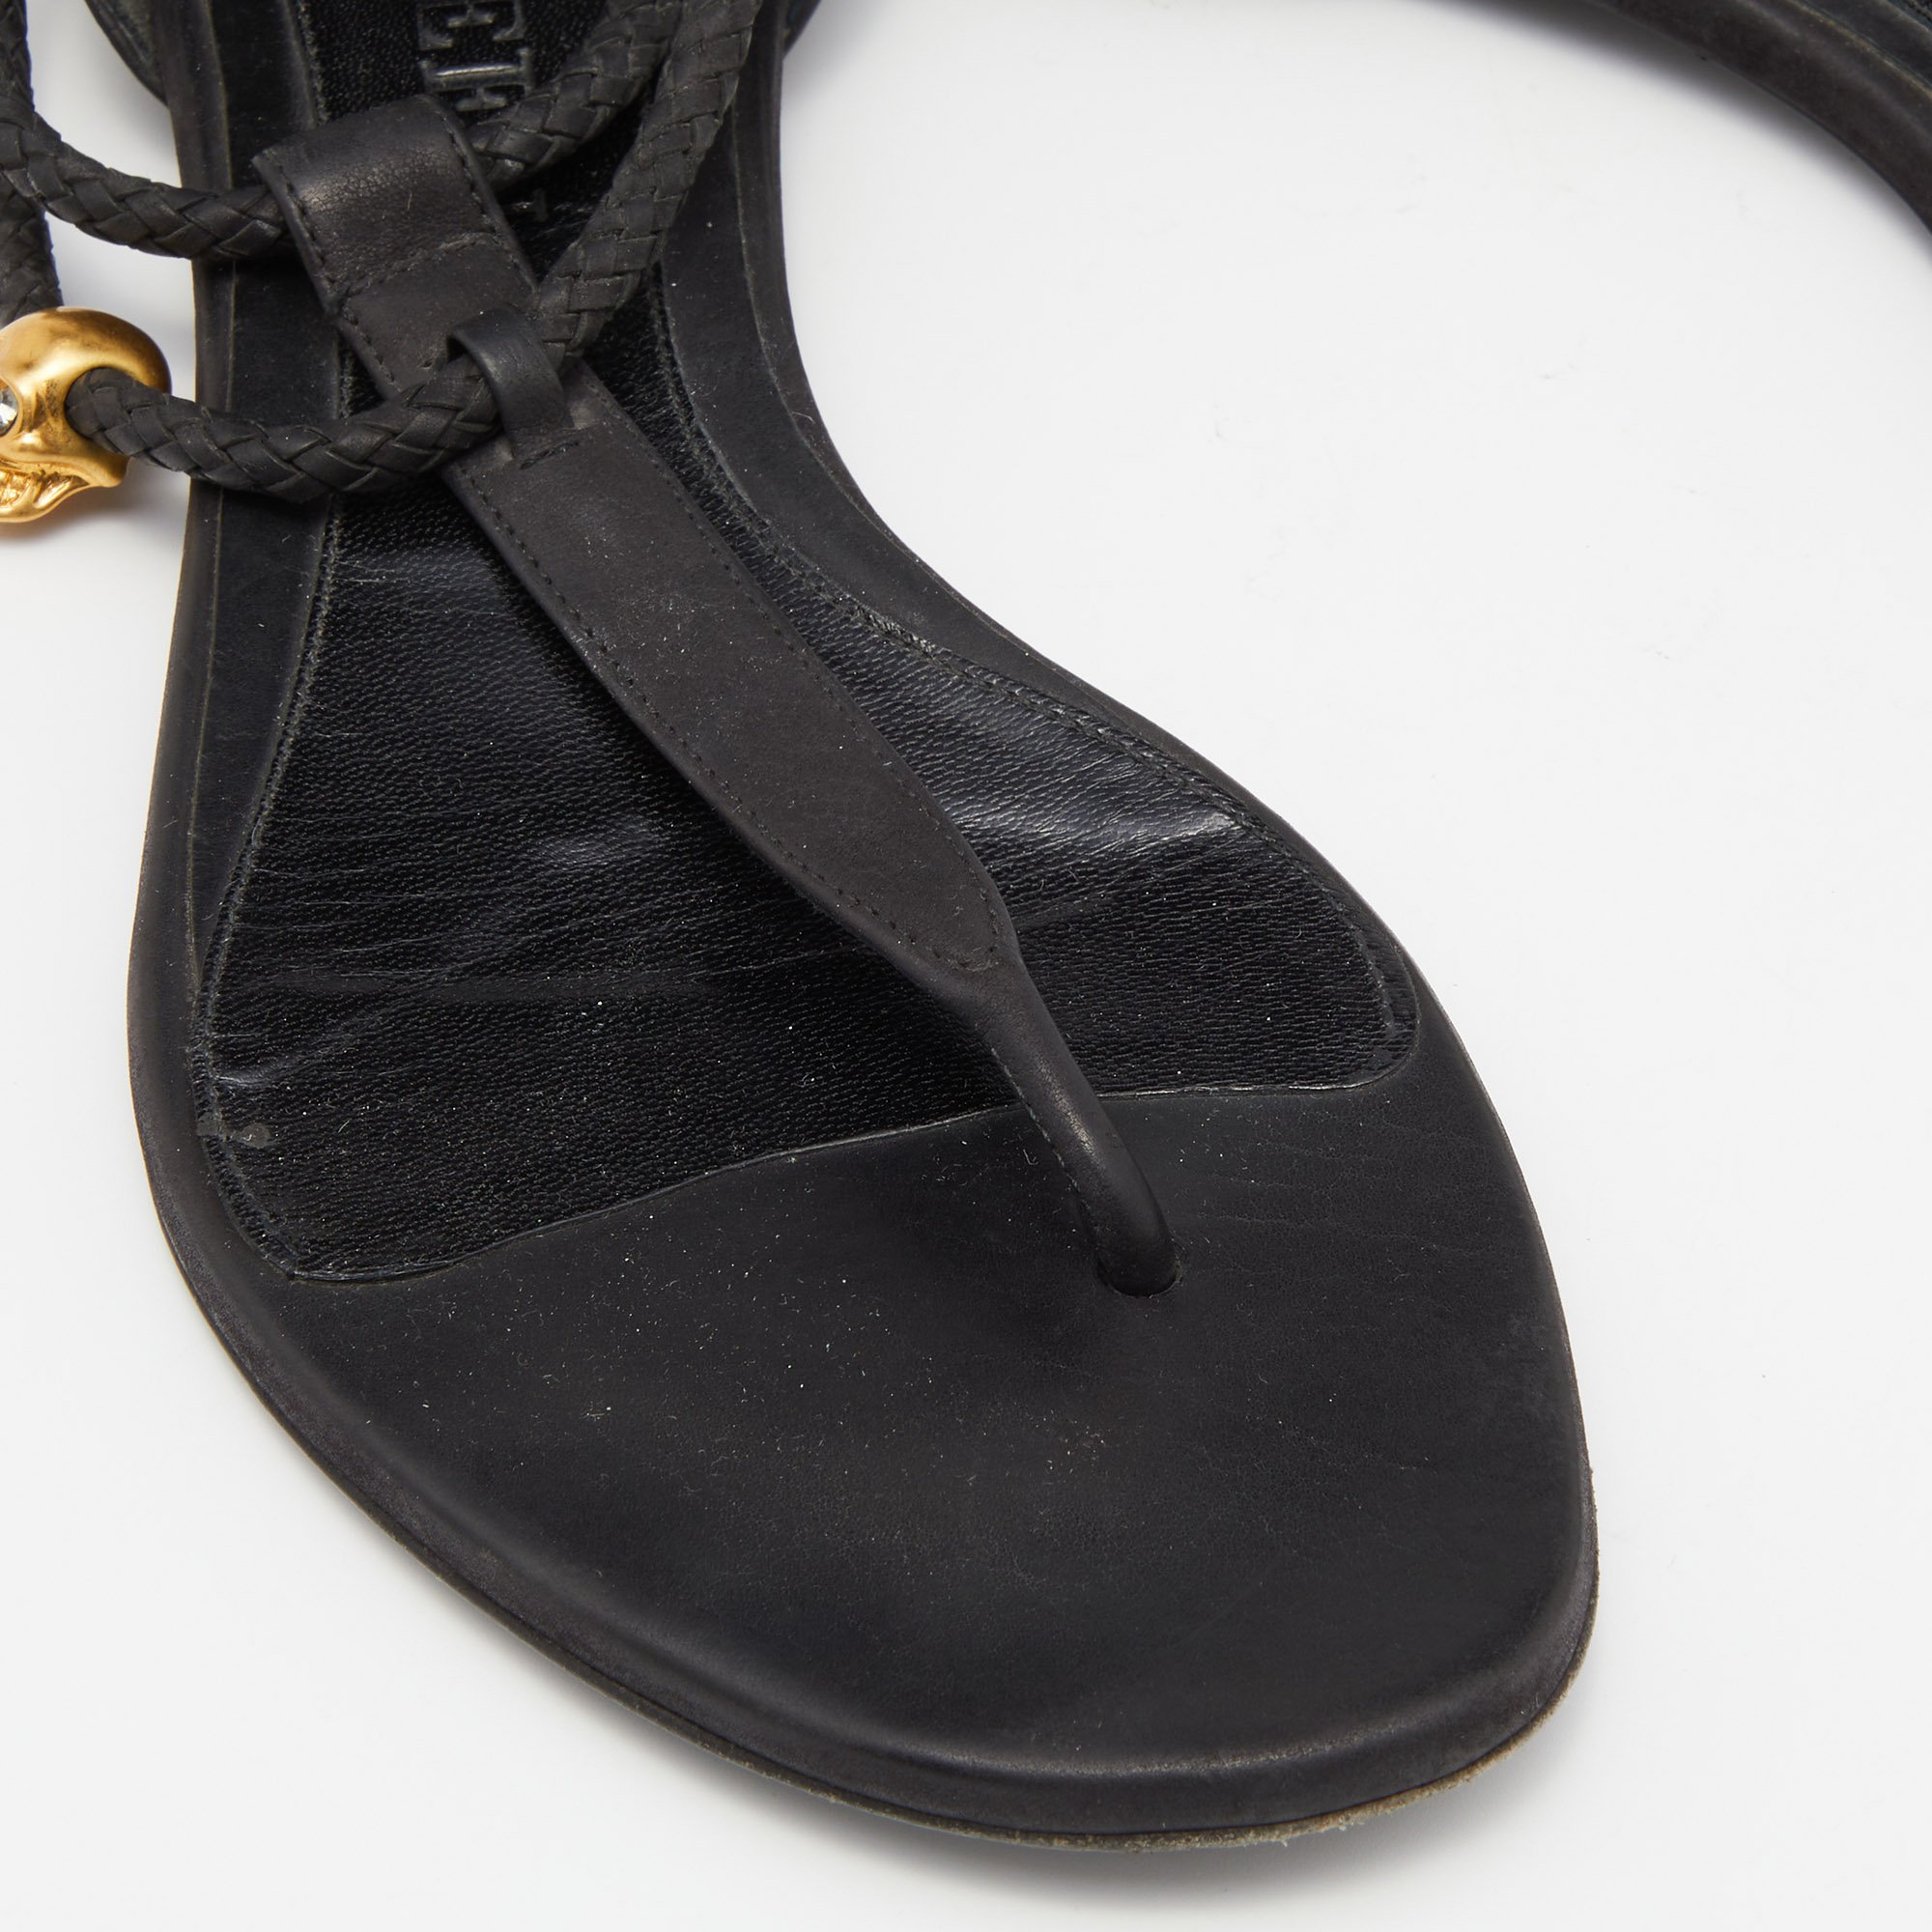 Alexander McQueen Black Leather Skull Embellished Thong Flat Sandals Size 39